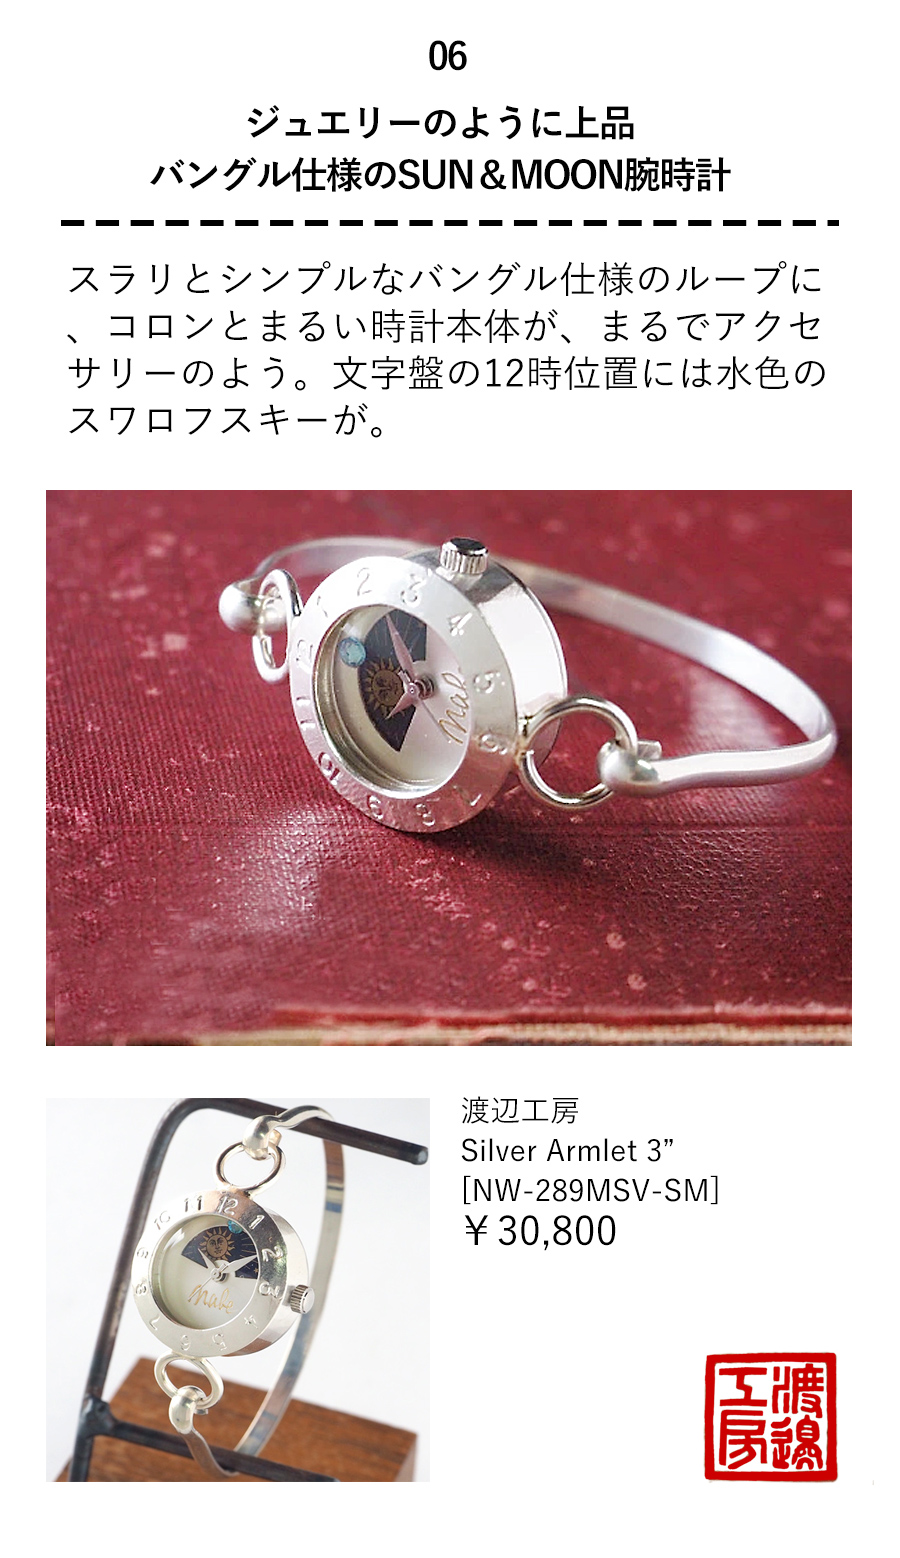 Watanabe Kobo Handmade Watch Silver Armlet 3